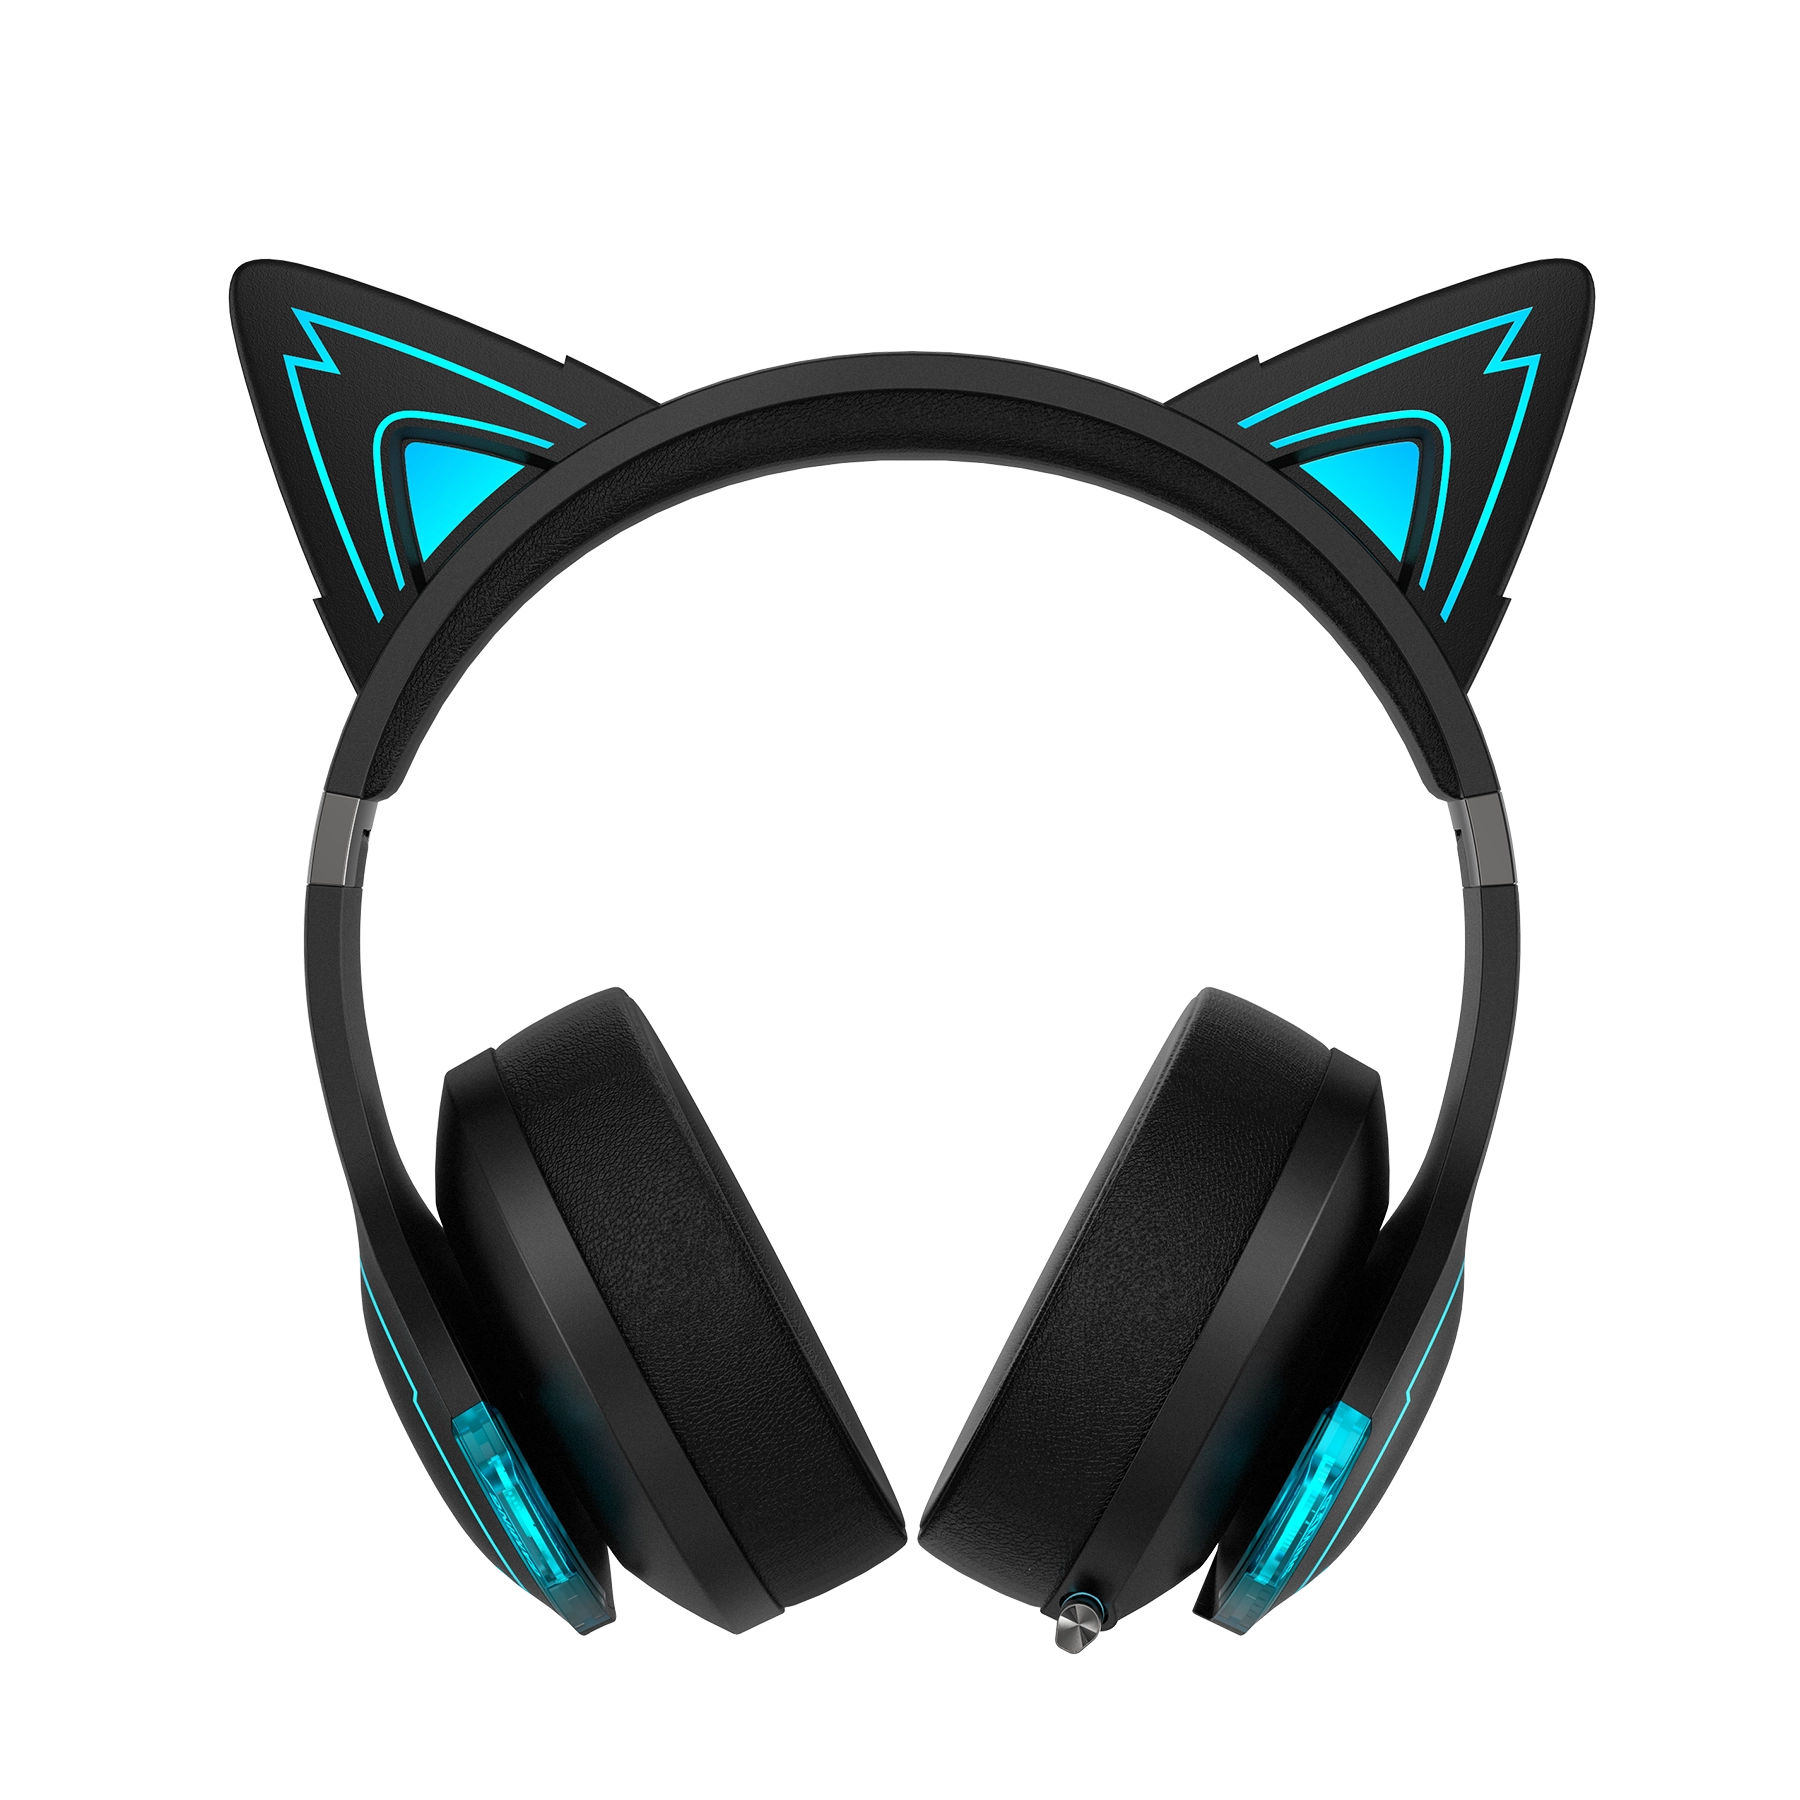 G5BT CAT-EAR Gaming Headset | Bluetooth Wireless/Wired 3.5mm Headphone